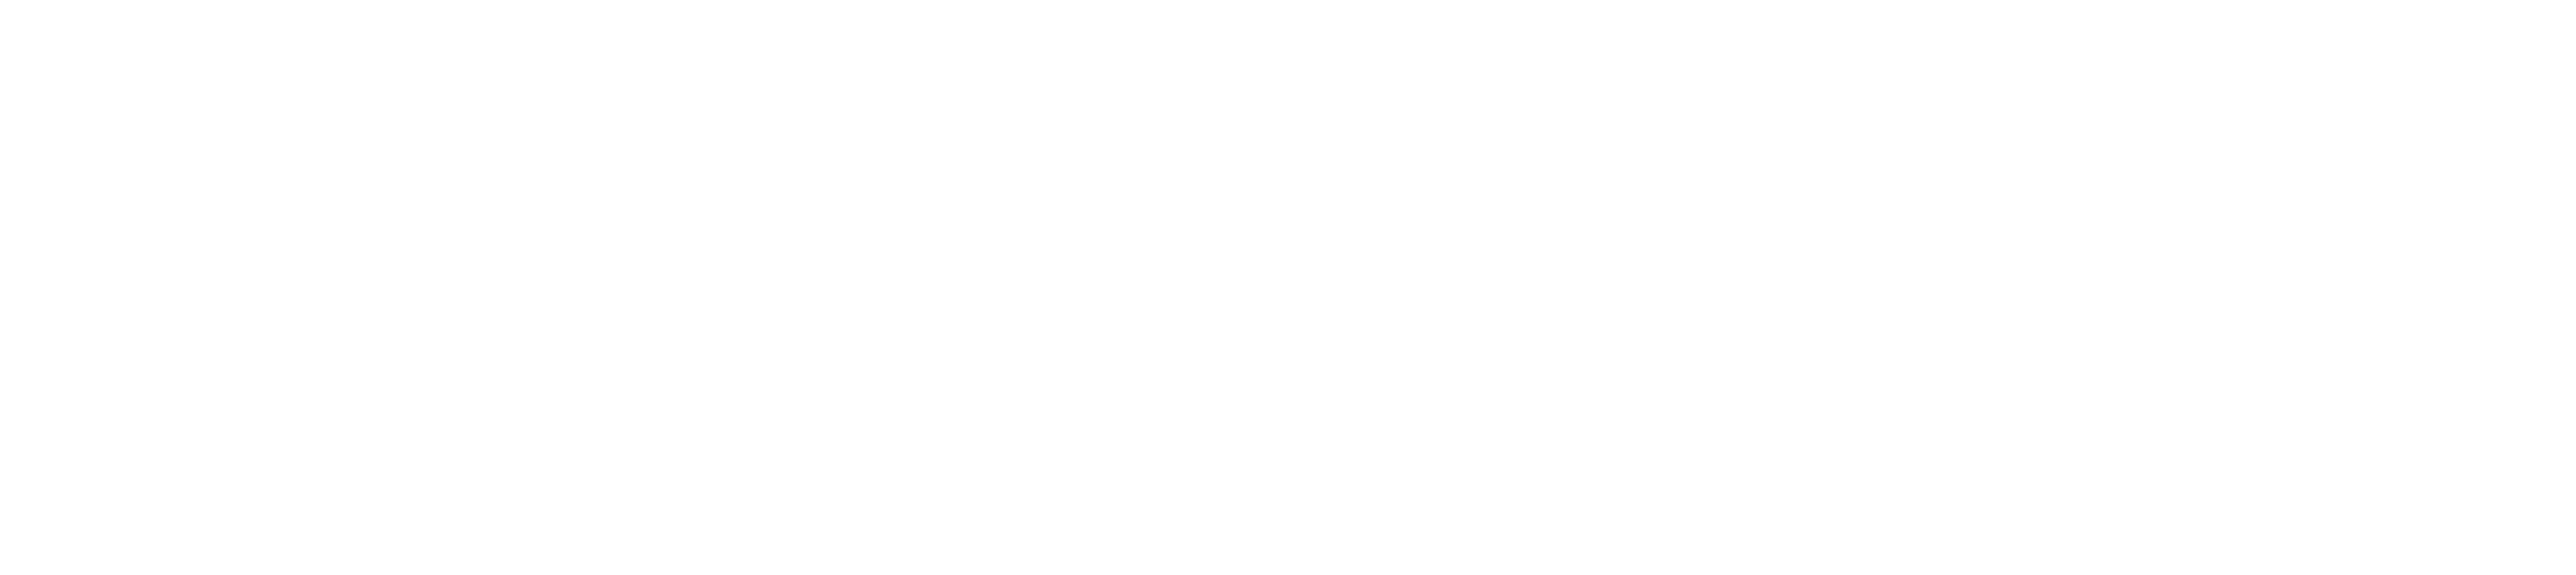 The SCOTT Experience Tour